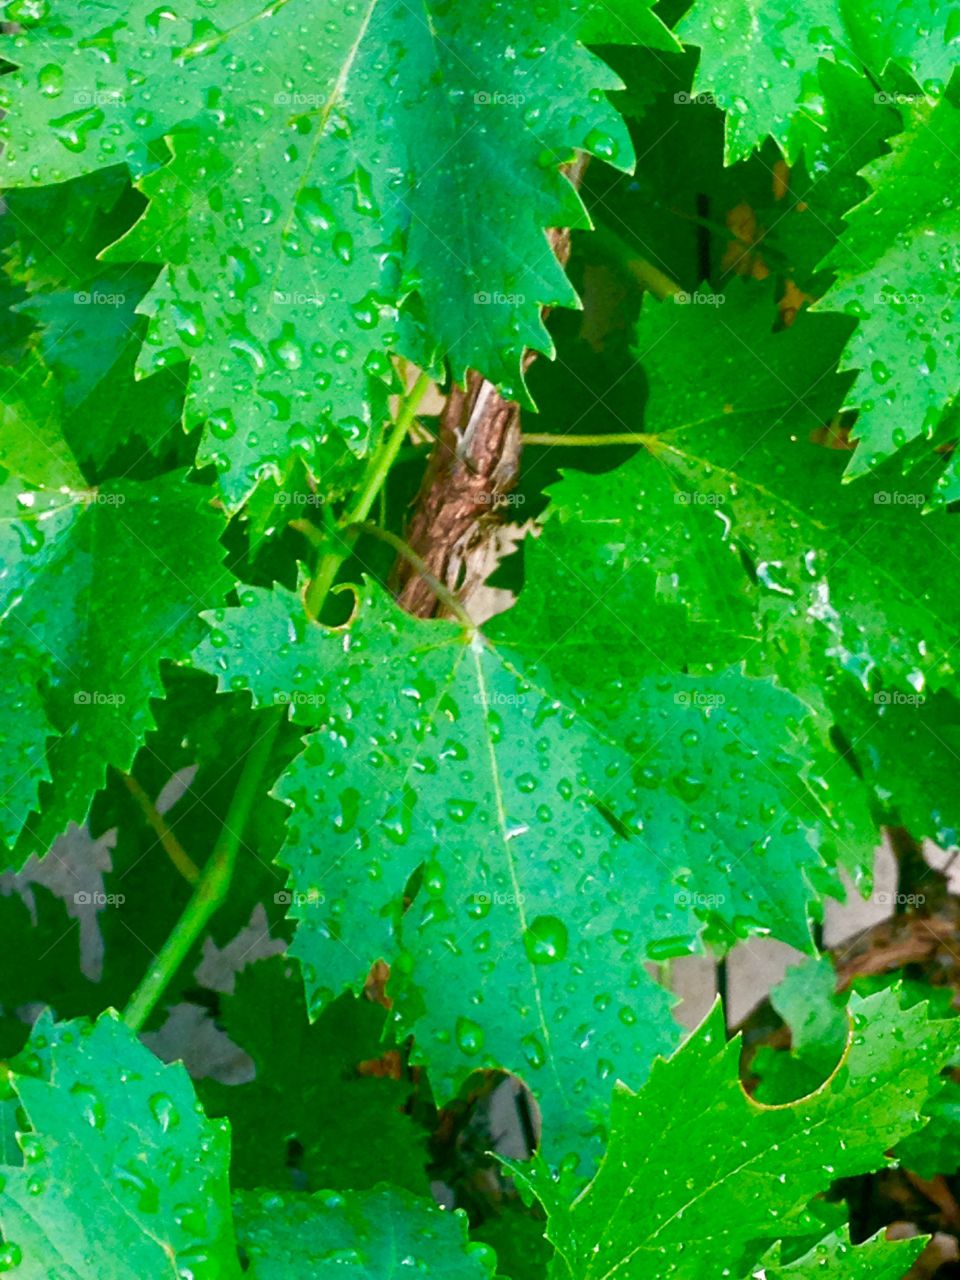 Grape leaves after rain